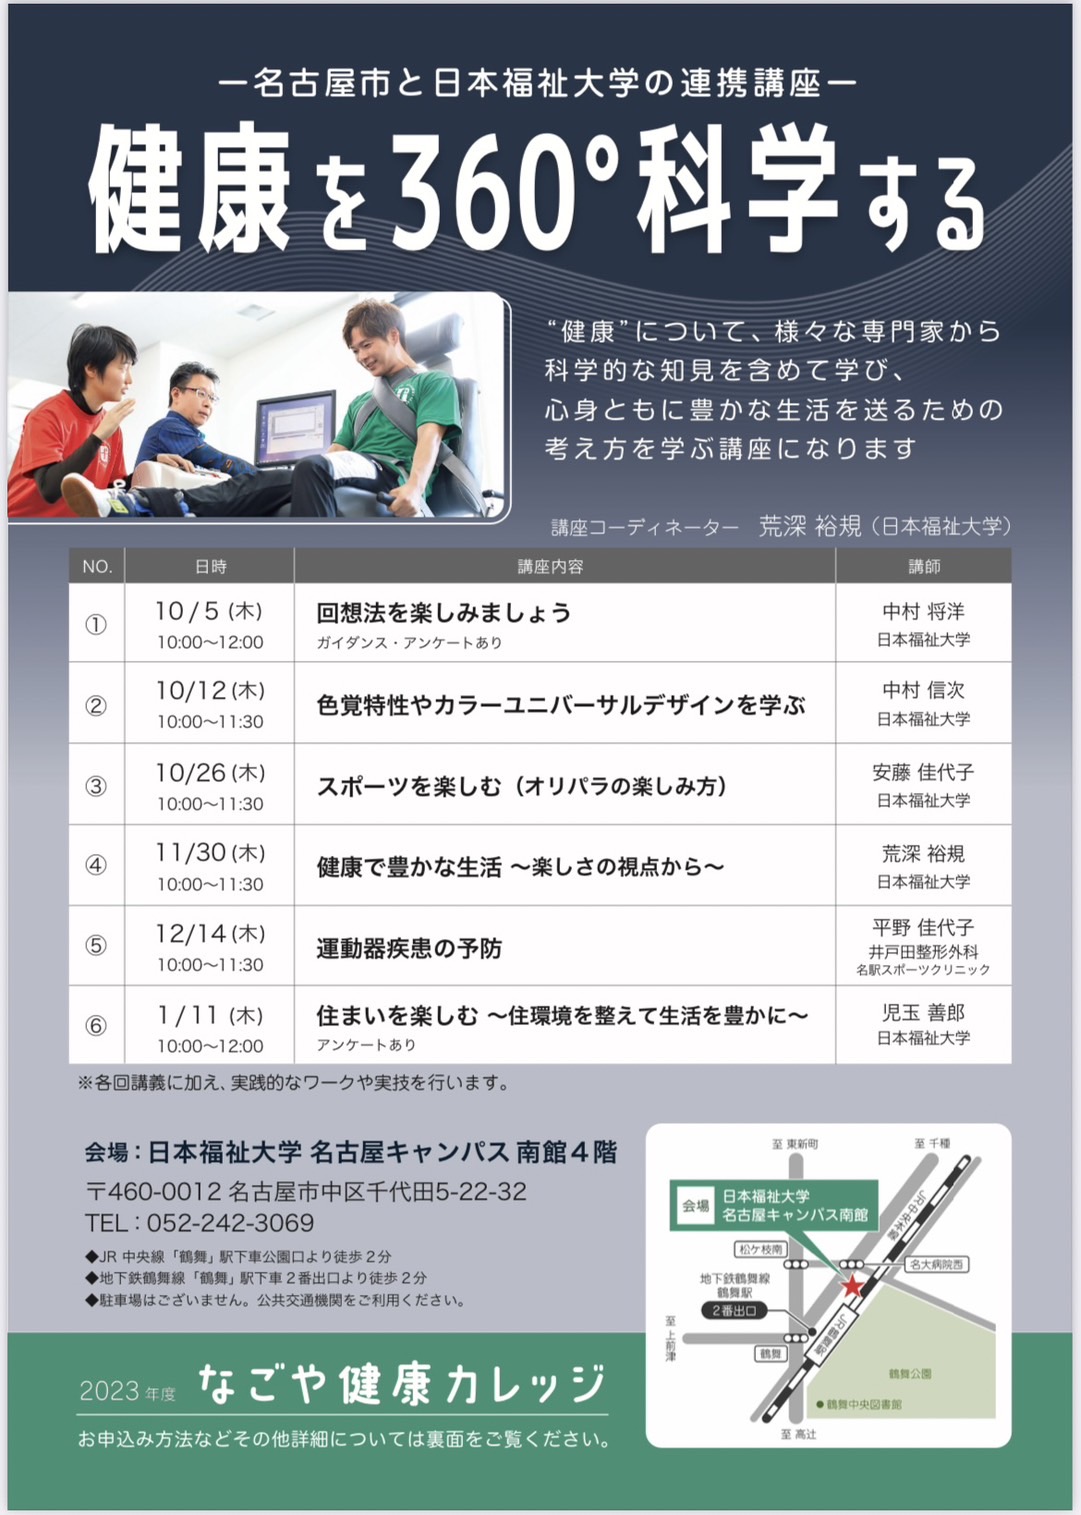 『健康を360°科学する』名古屋市/日本福祉大学 連携講座